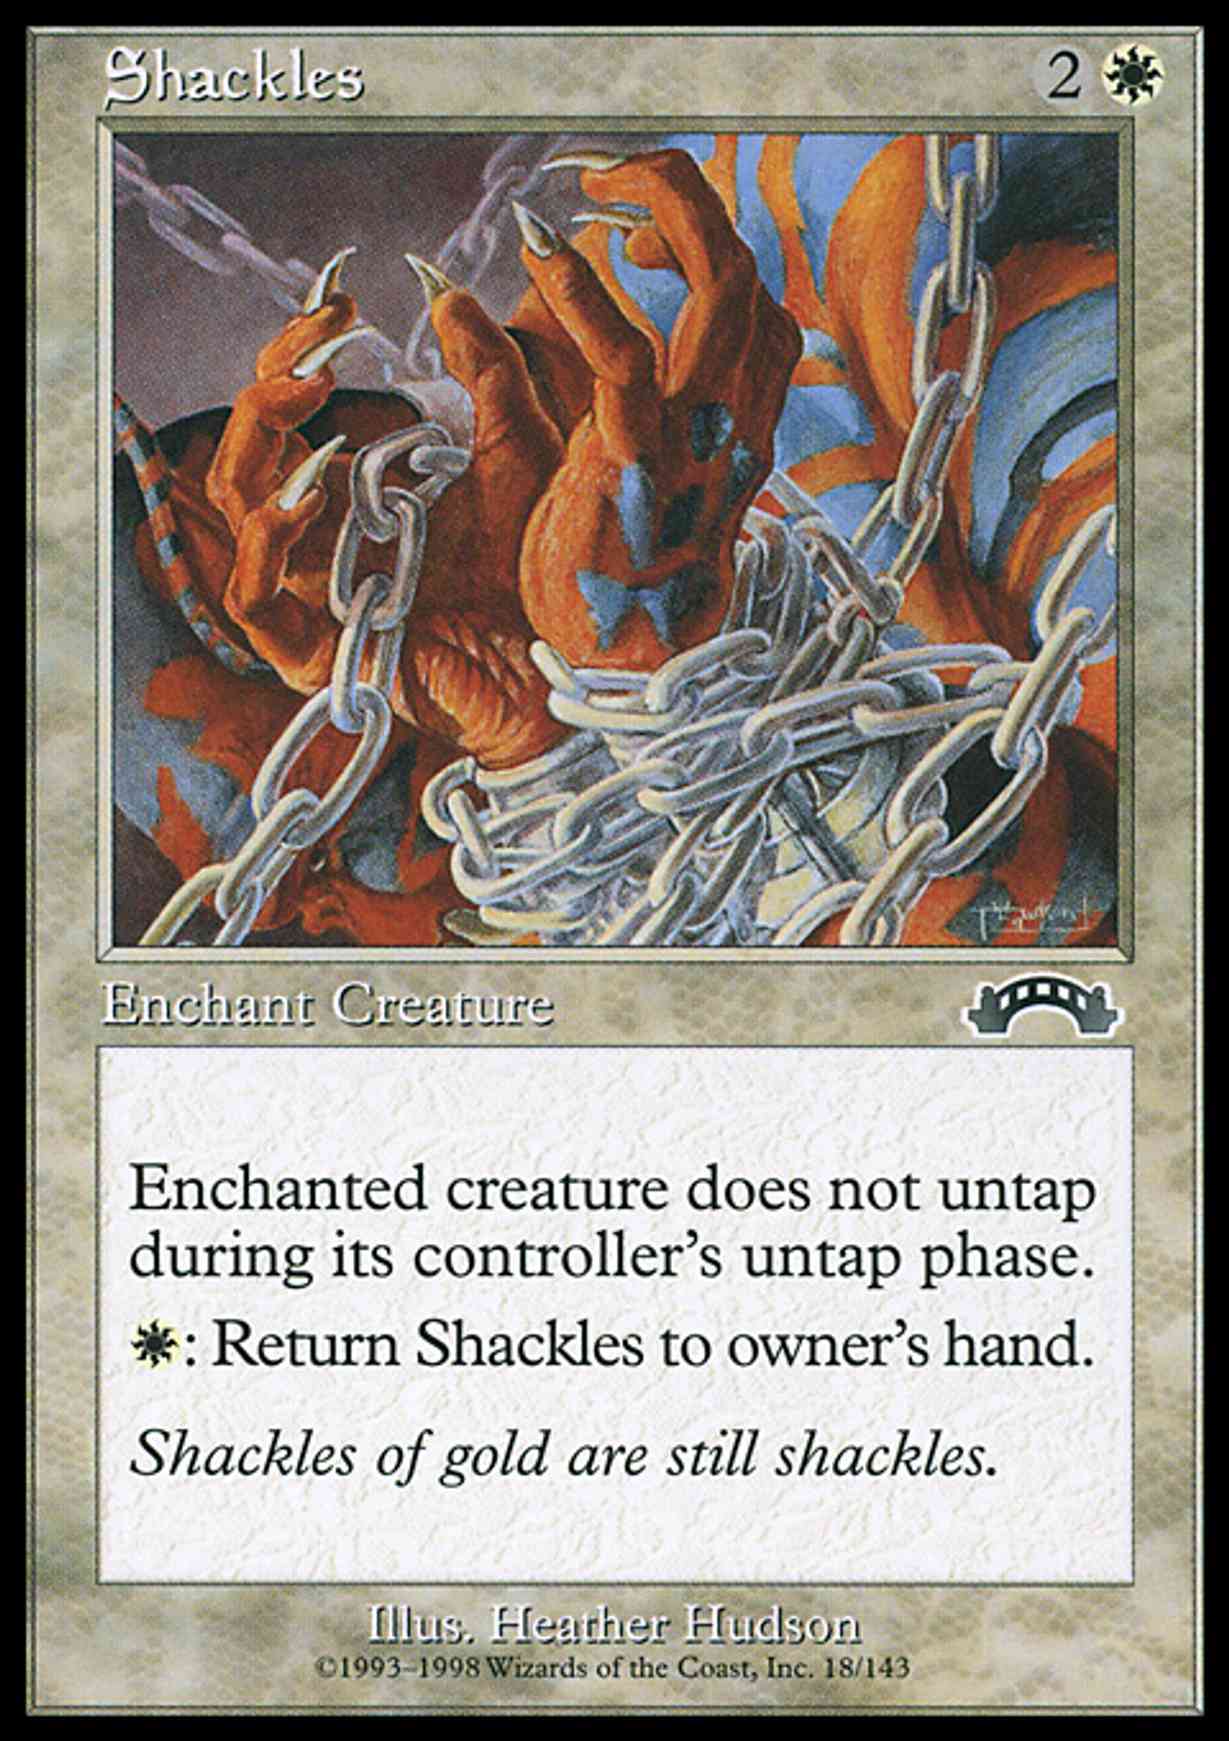 Shackles magic card front